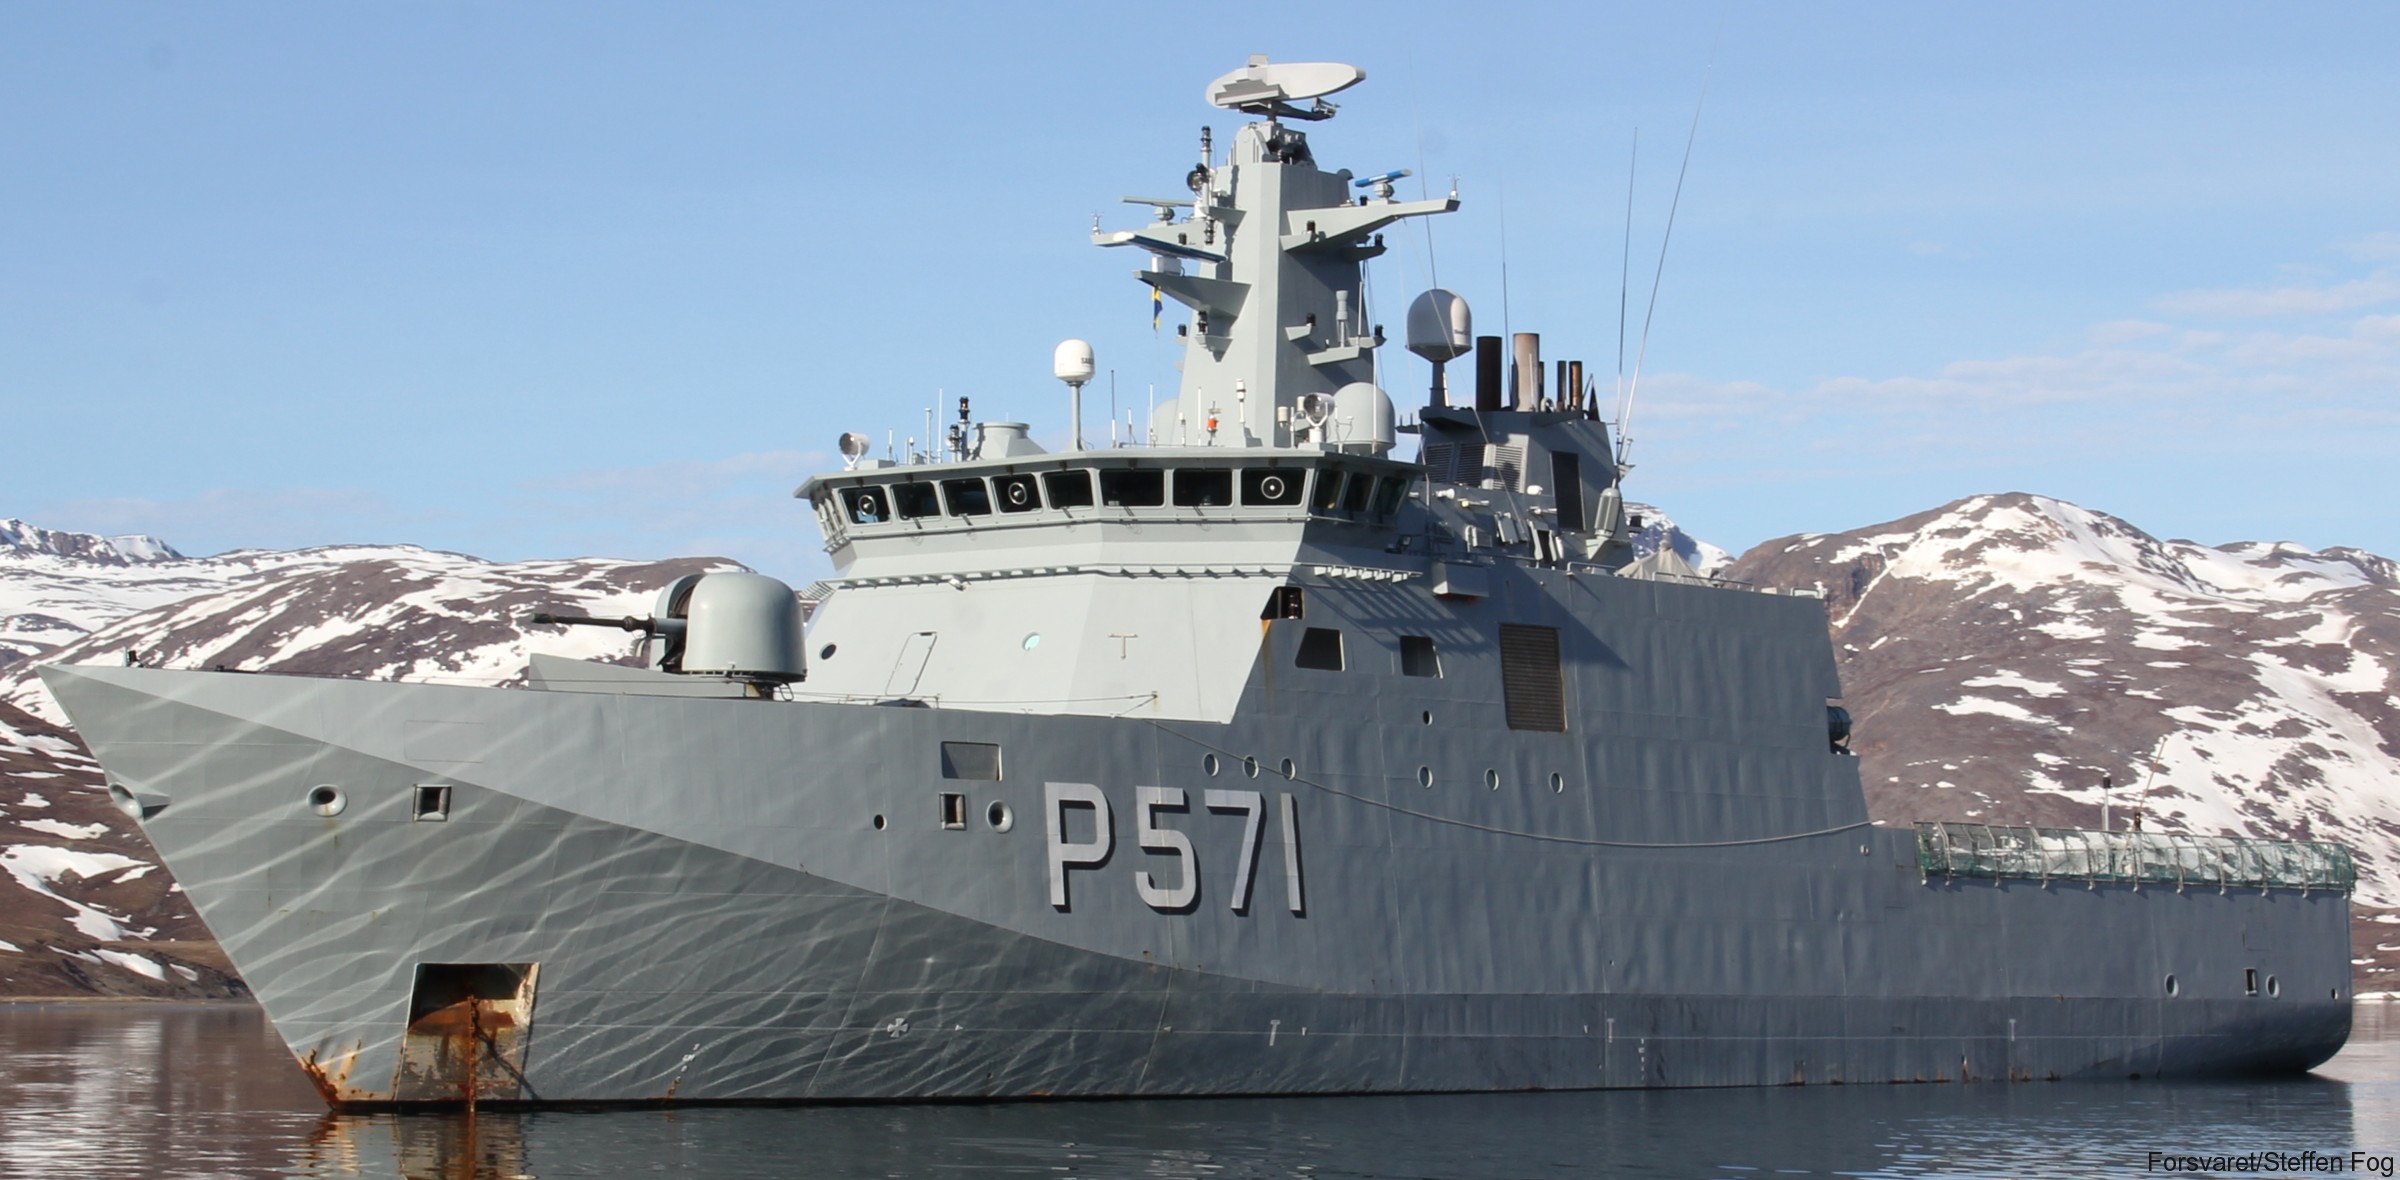 p-571 hdms ejnar mikkelsen knud rasmussen class offshore patrol vessel opv royal danish navy inspektionsfartøj 13